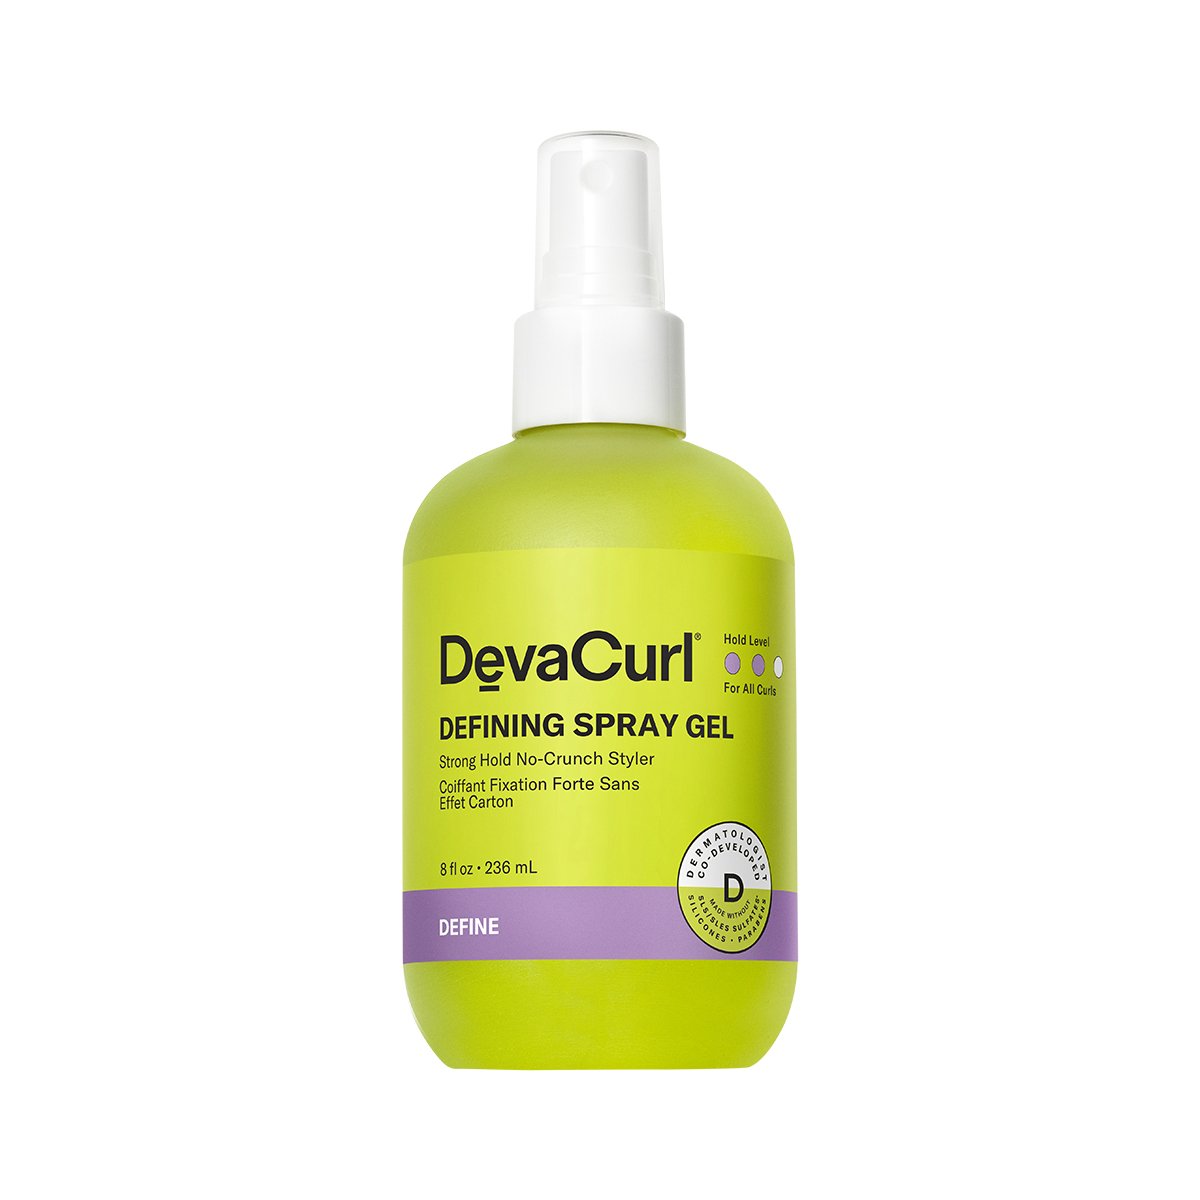 DevaCurl - Defining Spray Gel 8oz - by Devacurl |ProCare Outlet|